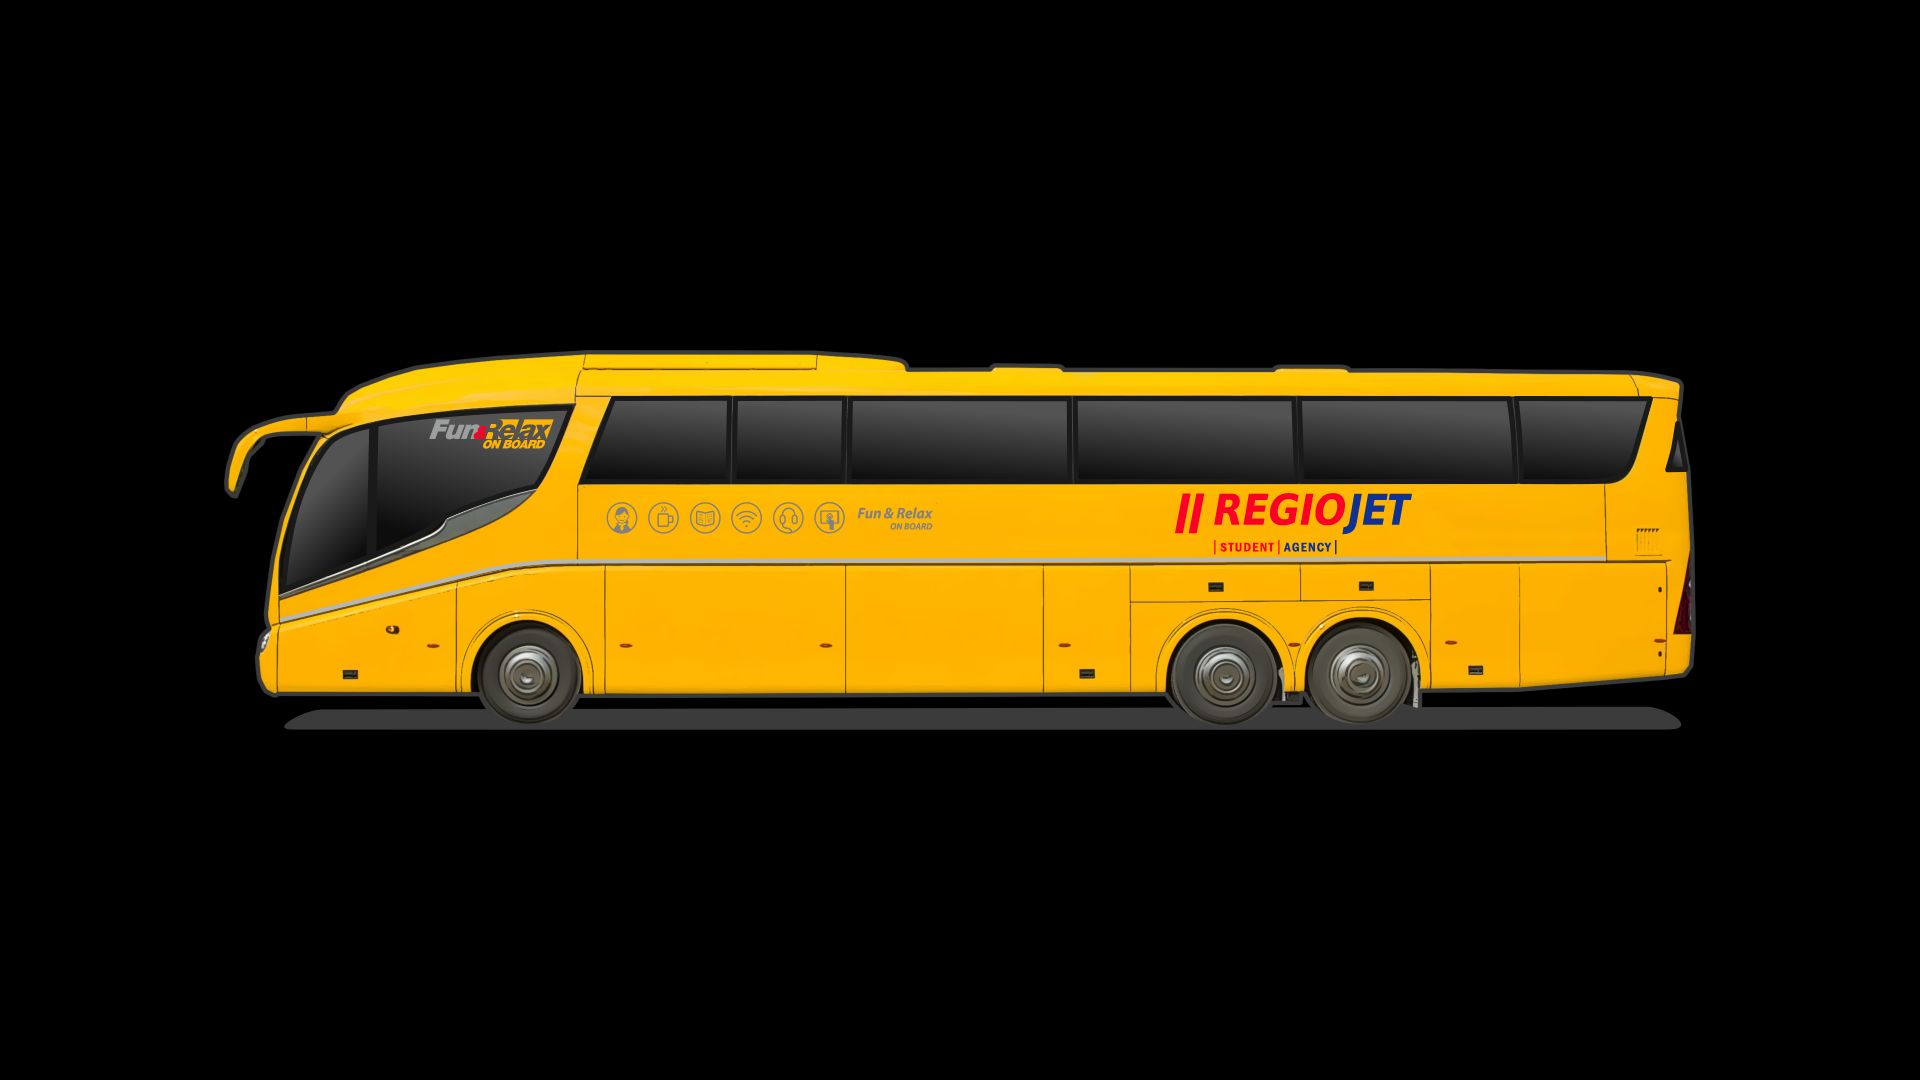 Student Agency se změnil na RegioJet, autobus